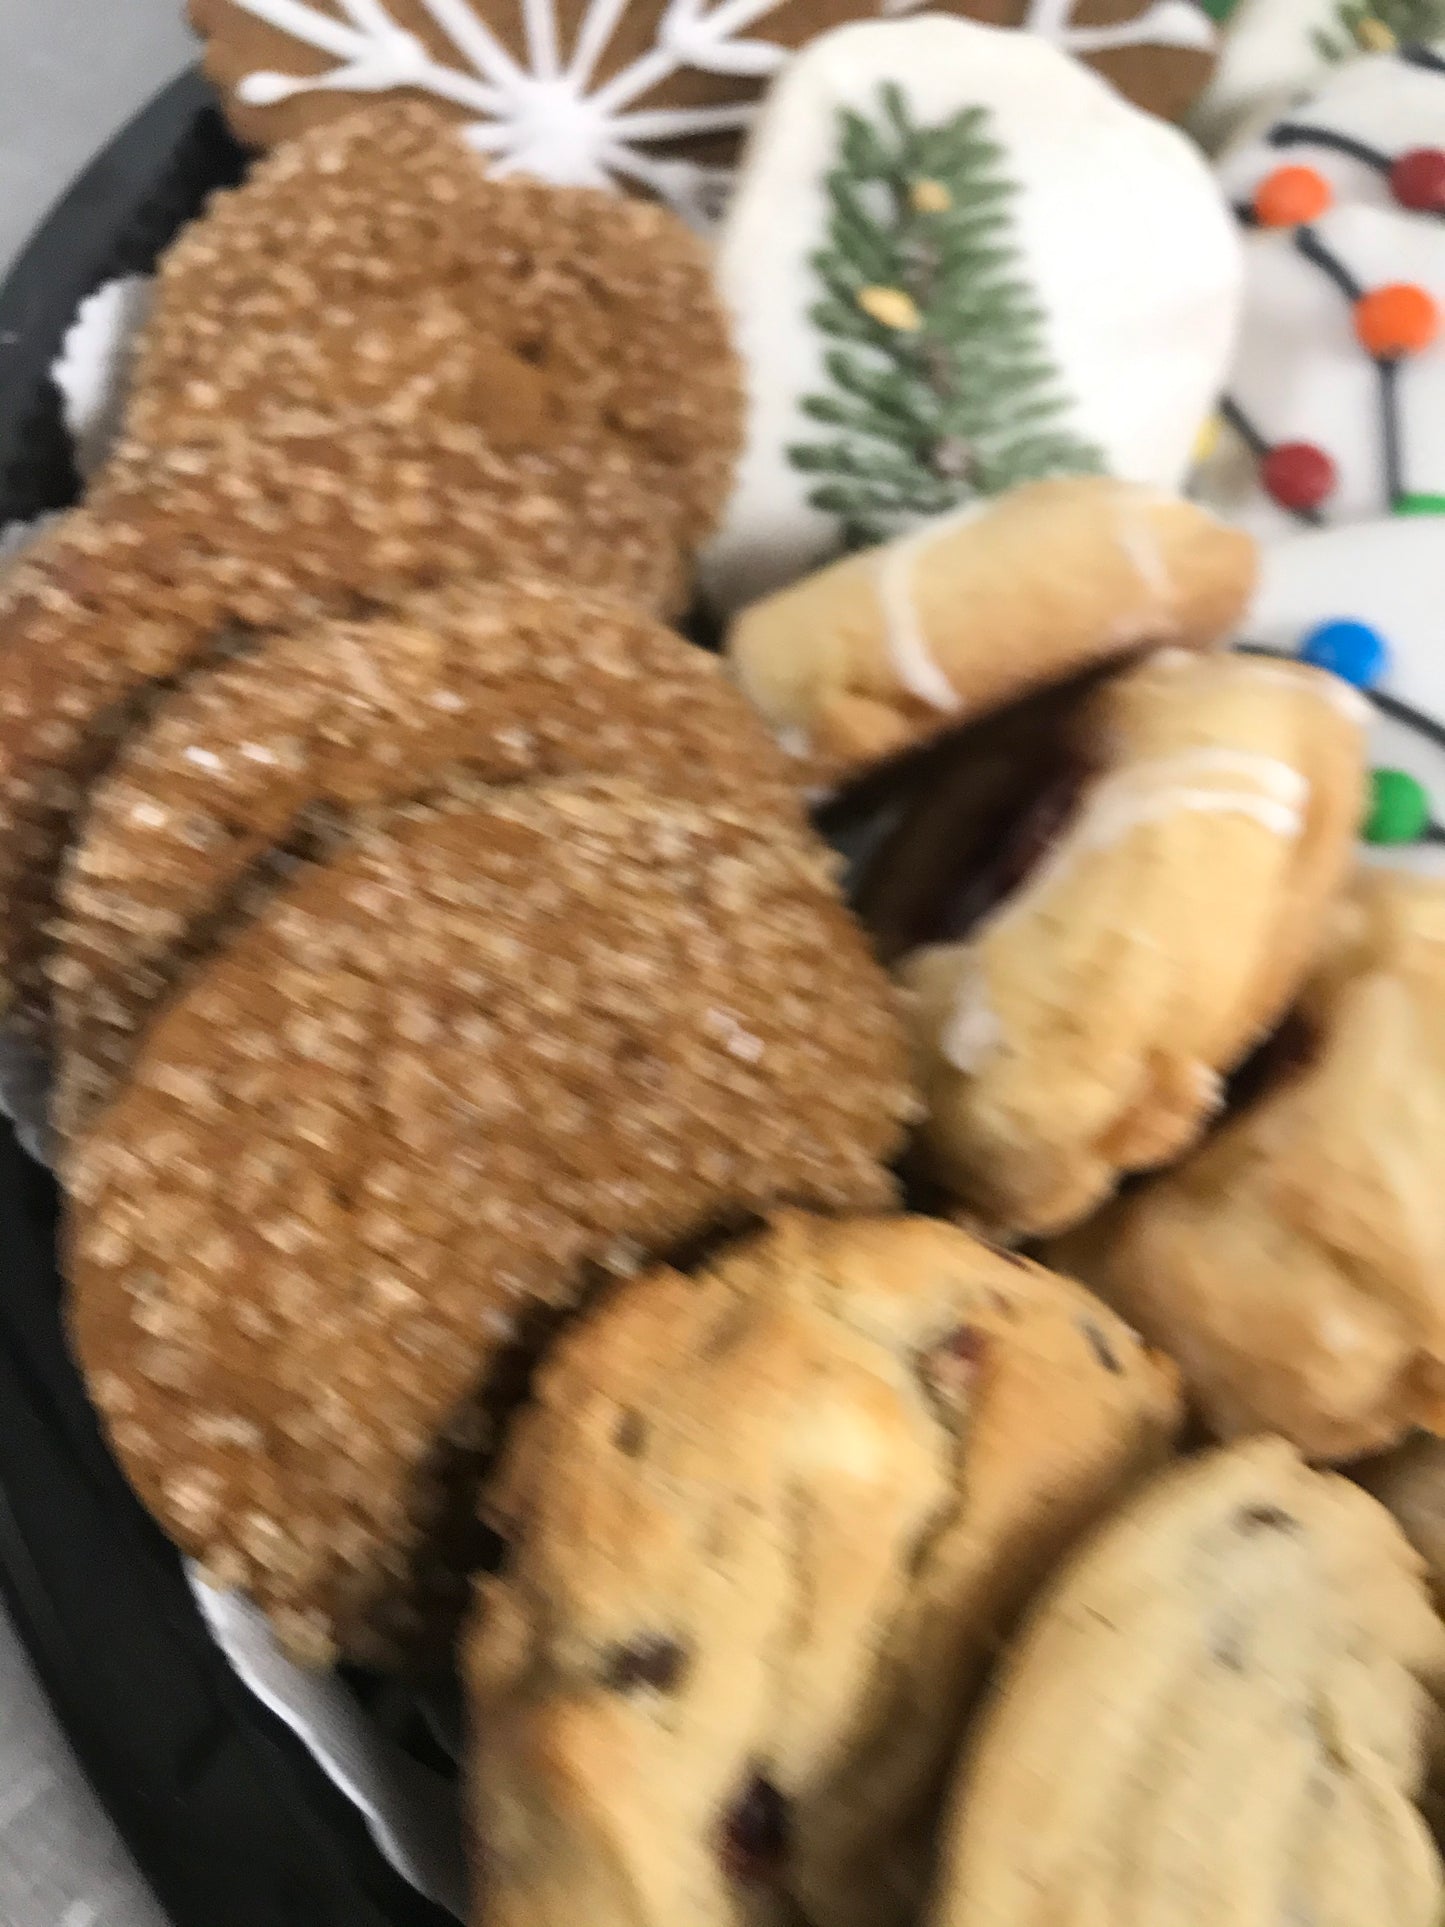 Custom Platter Cookies